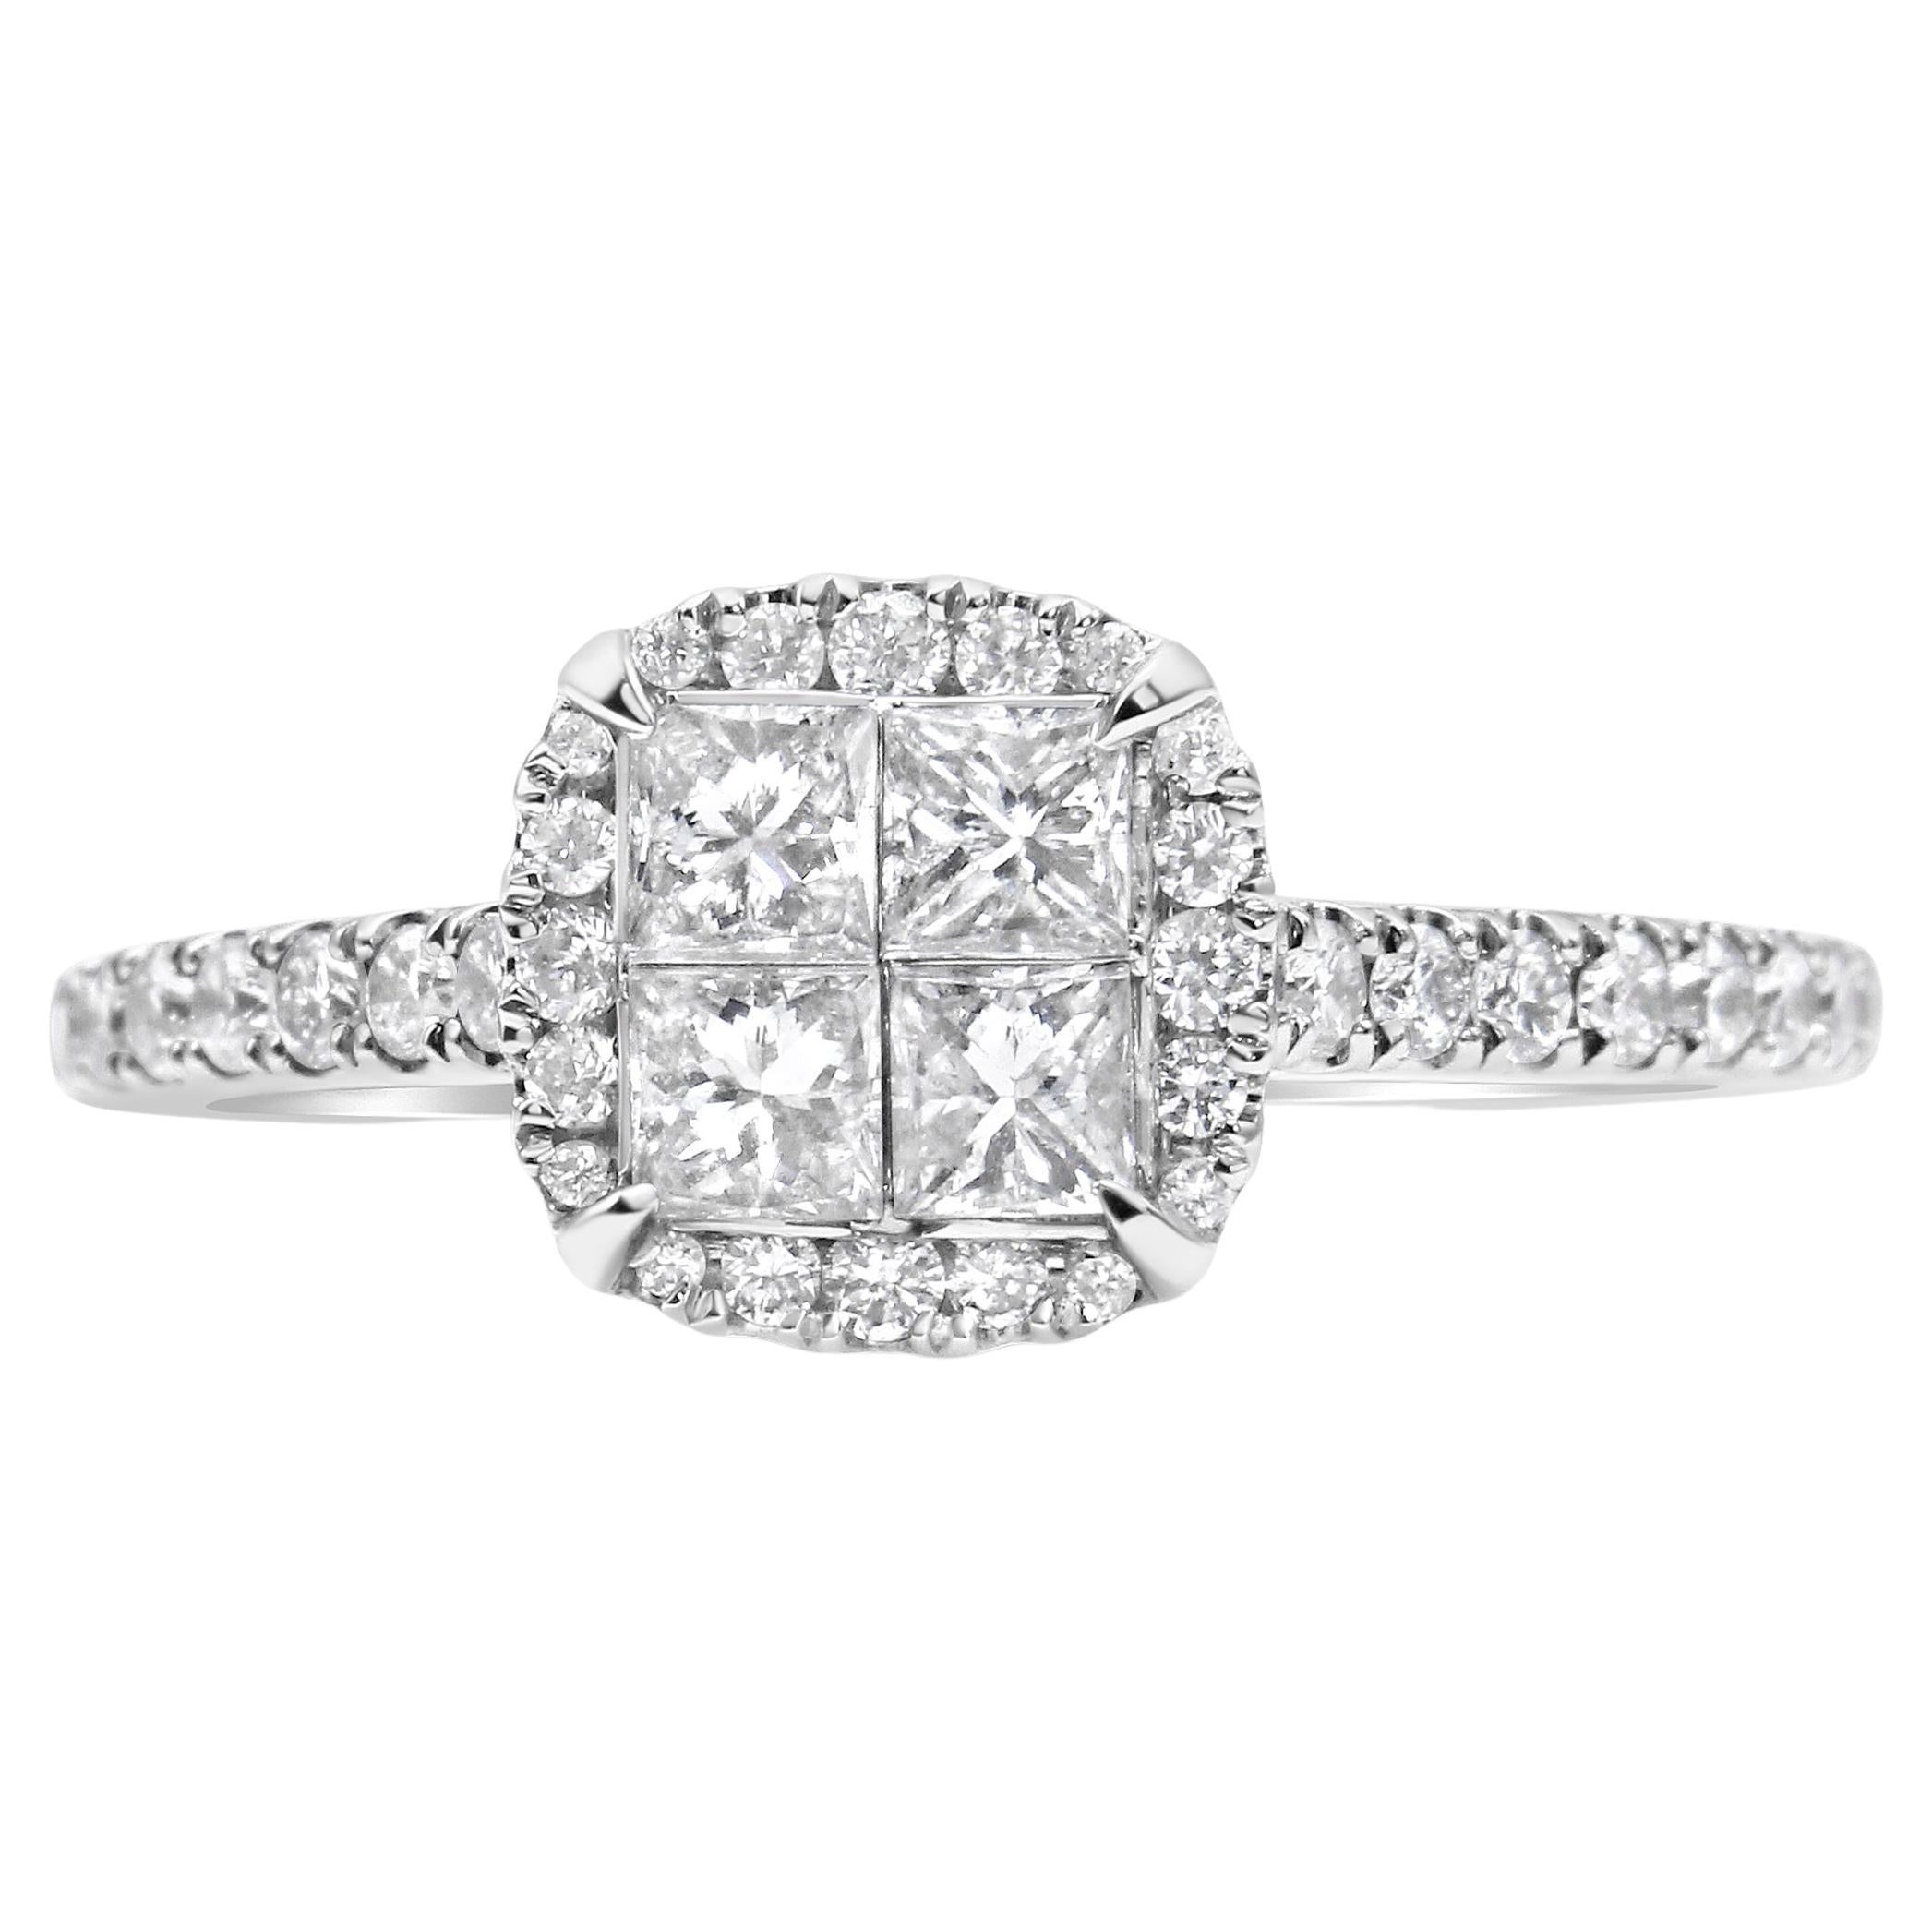 14K White Gold 1.0 Carat Diamond Composite Cushion Shaped Engagement Ring